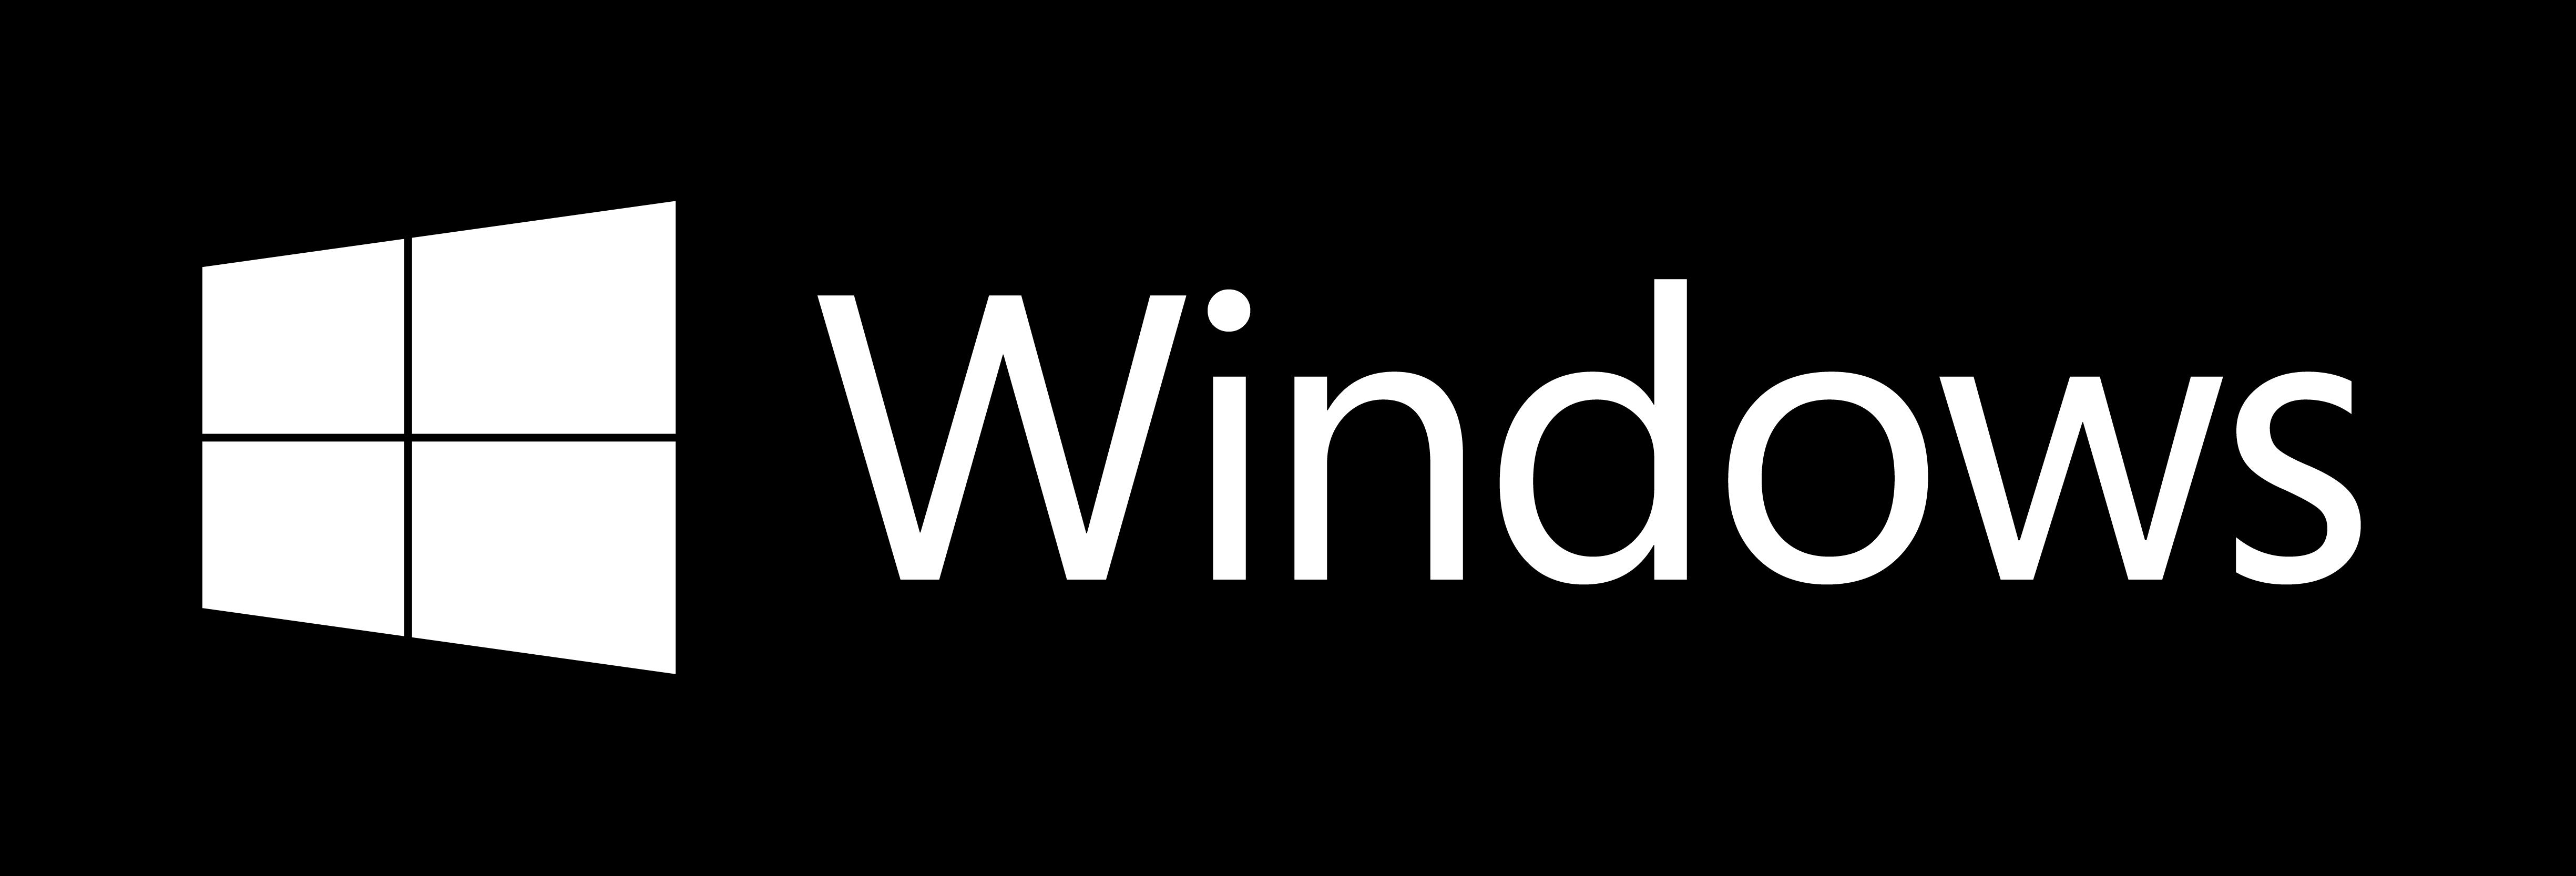 Microsoft Windows Microsoft creó el sistema operativo Windows a mediados de 1980.